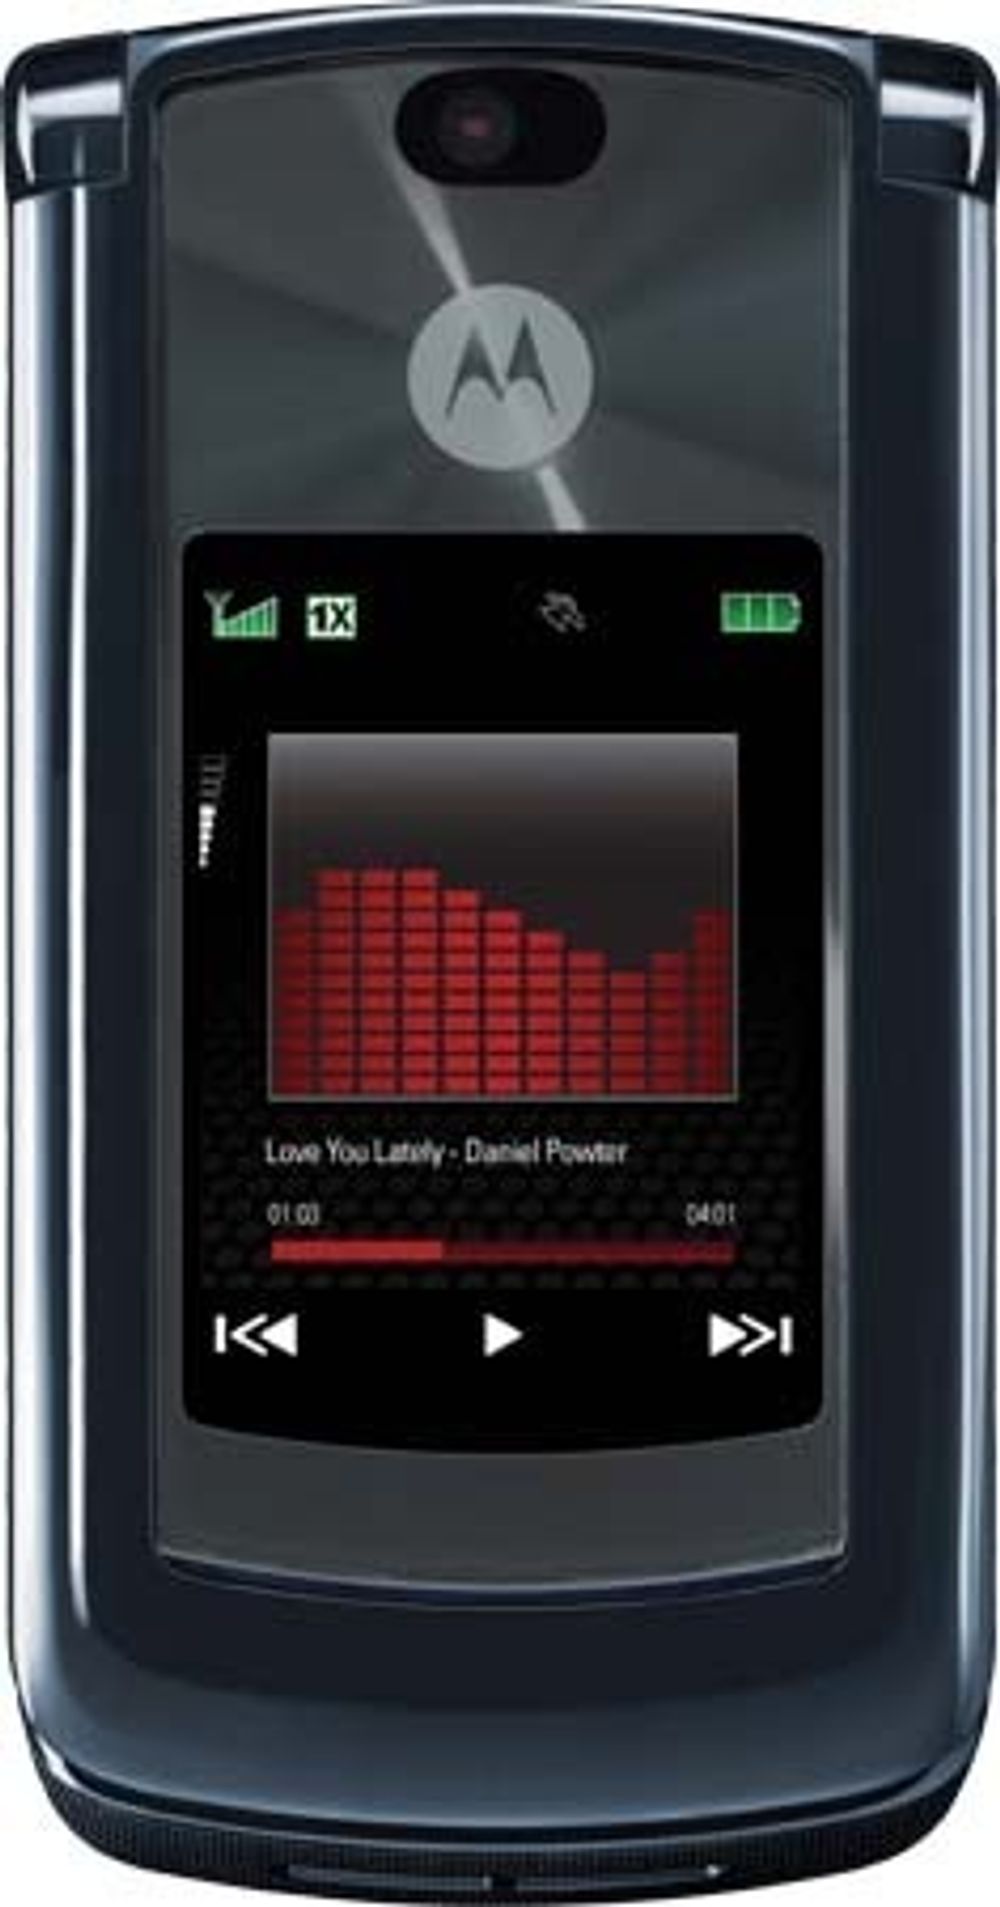 Motorola Razr2V9m. Mobiltelefoner. Mobil. Klapptelefon. Minnekort. Video. Digitalt kamera. Mobilkamera. iPhone.